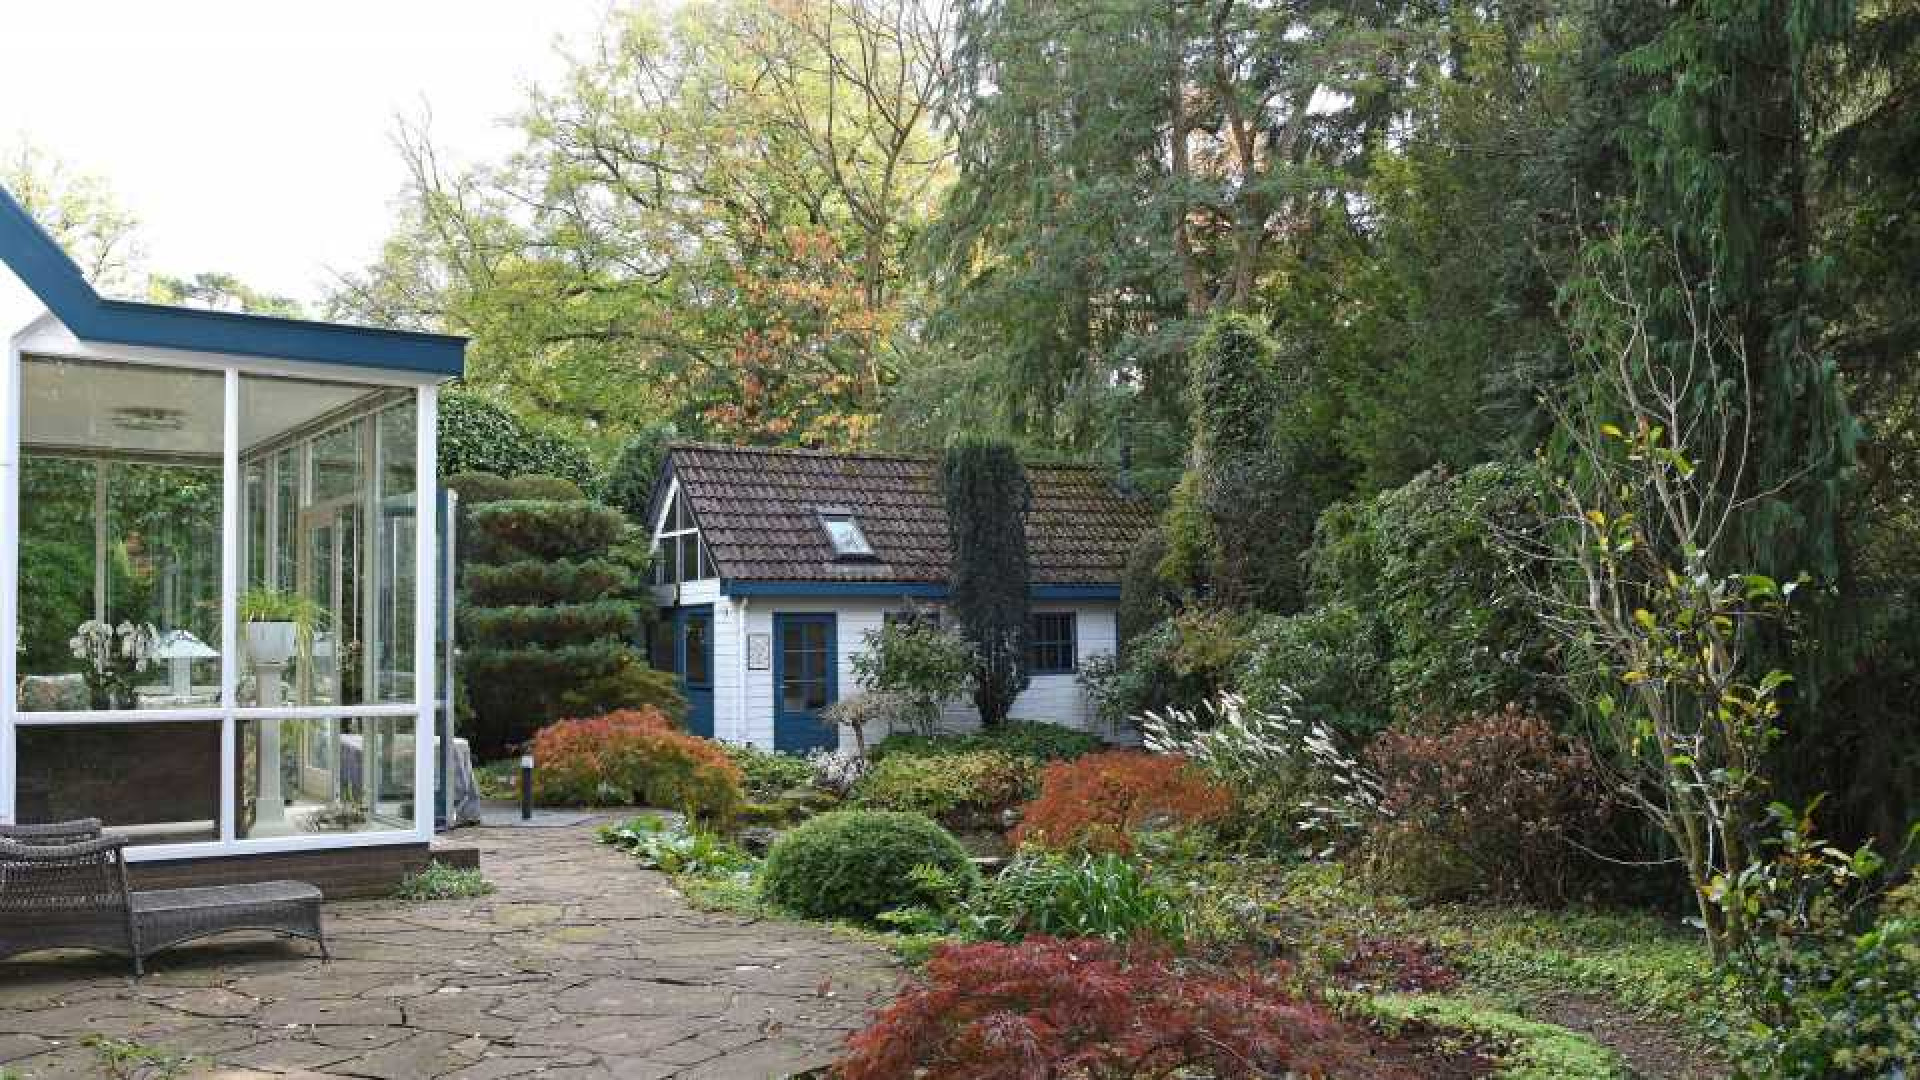 Villa overleden Sjoukje Hooymaayer verkocht